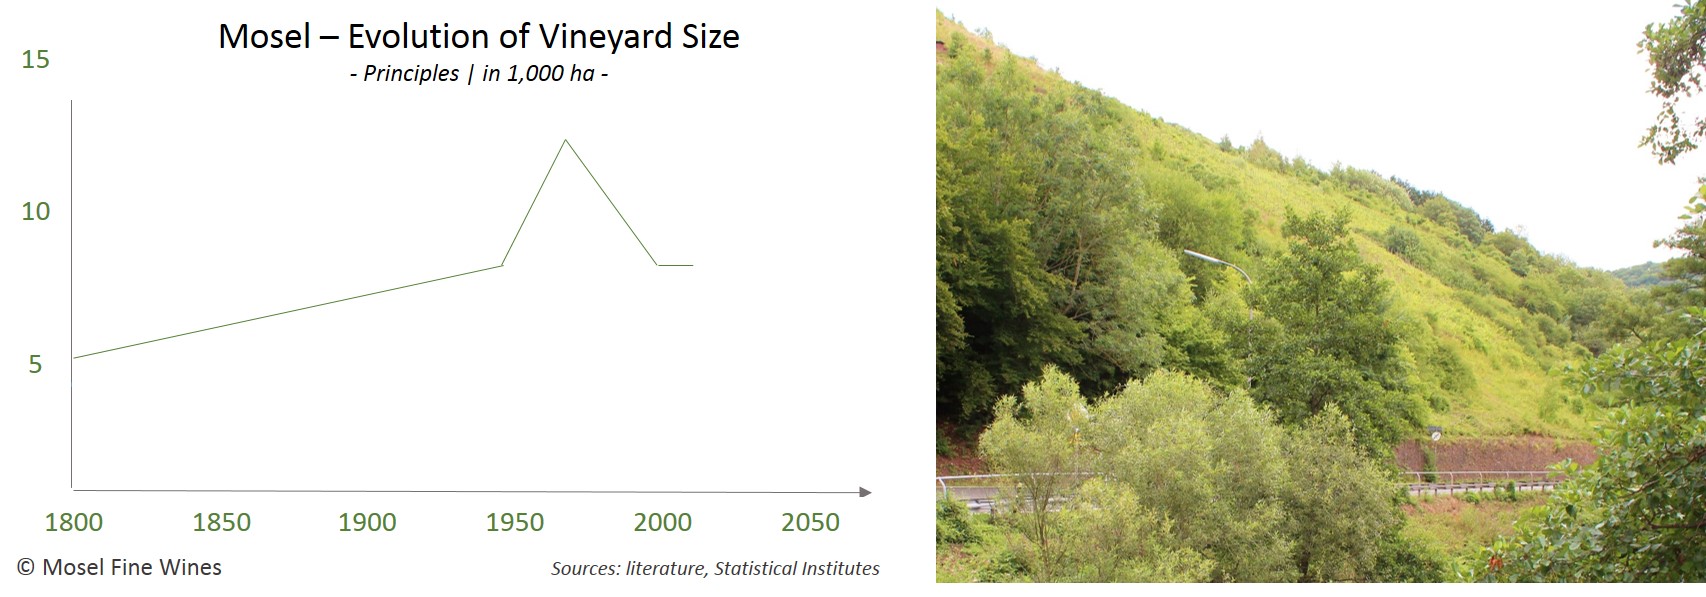 Mosel Vineyards | Evolution of Vineyard Area 1800-2015